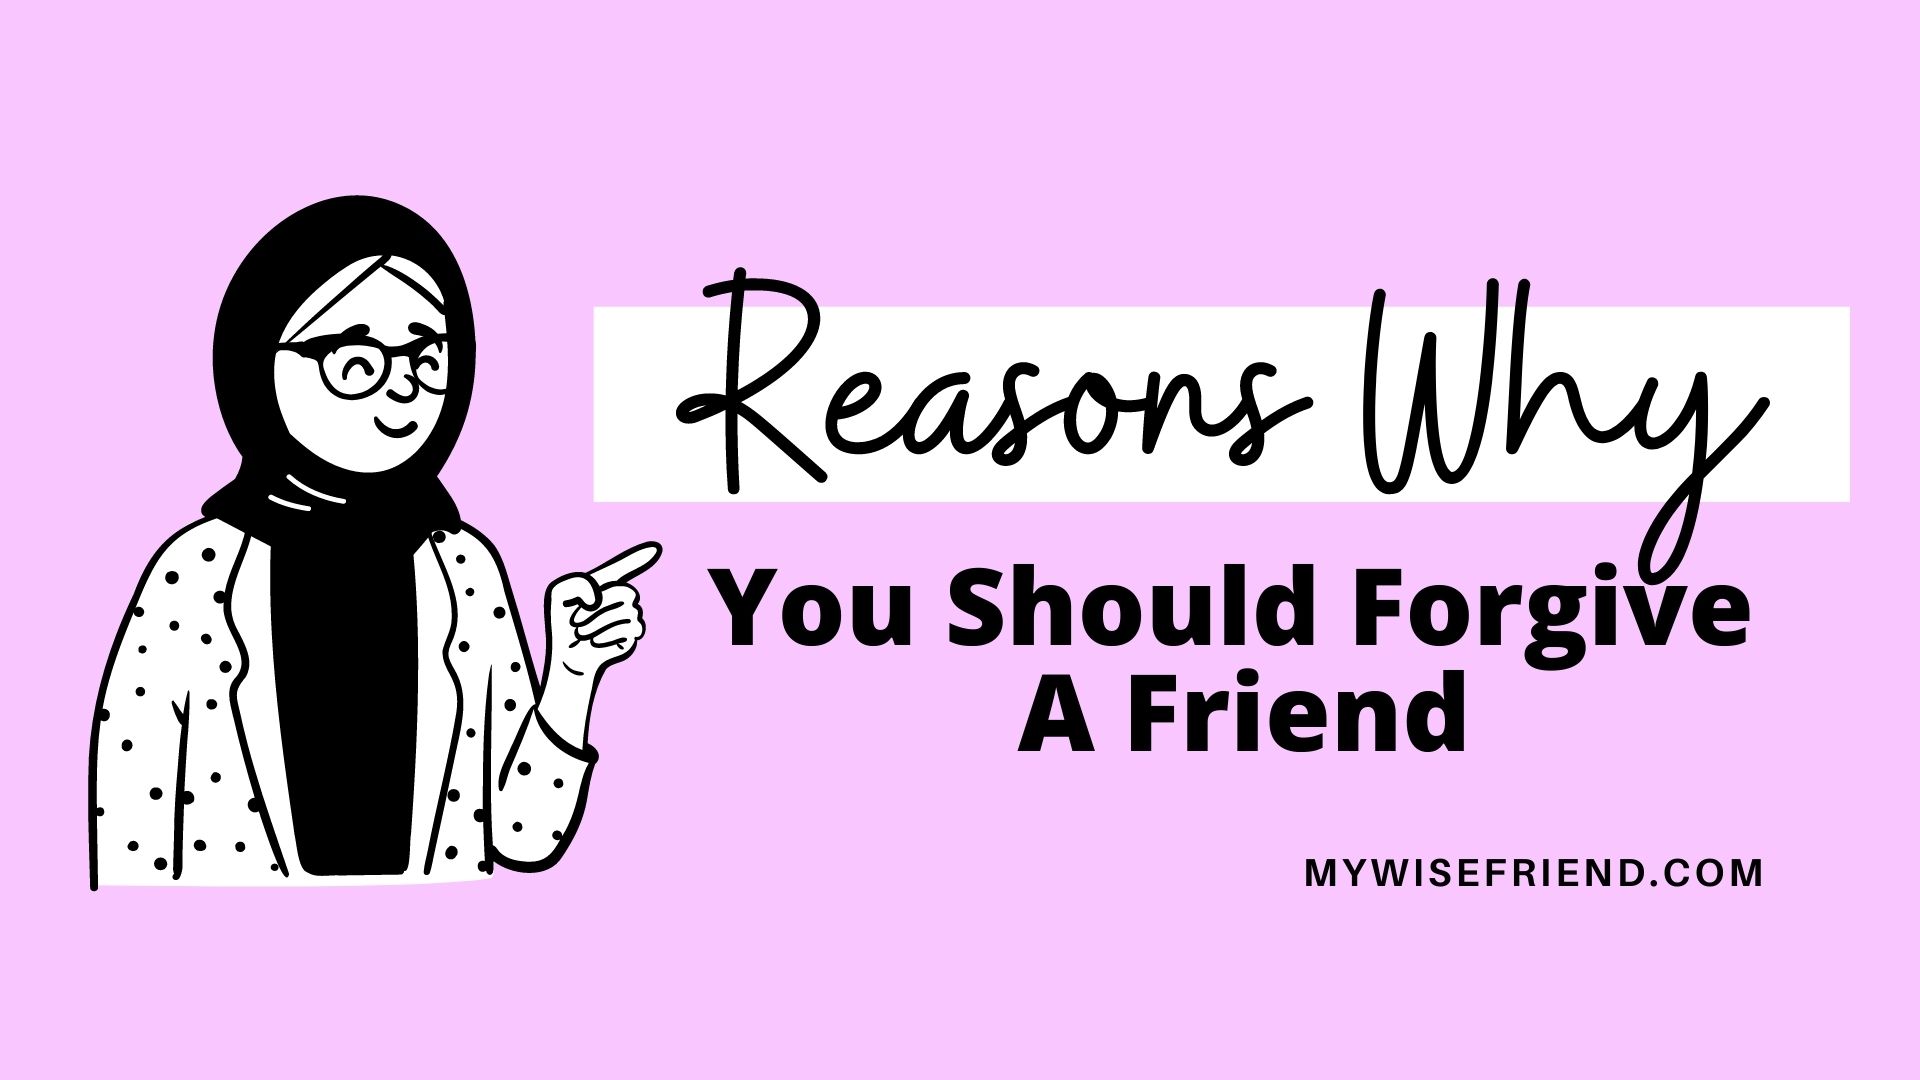 Reasons why you should forgive a friend